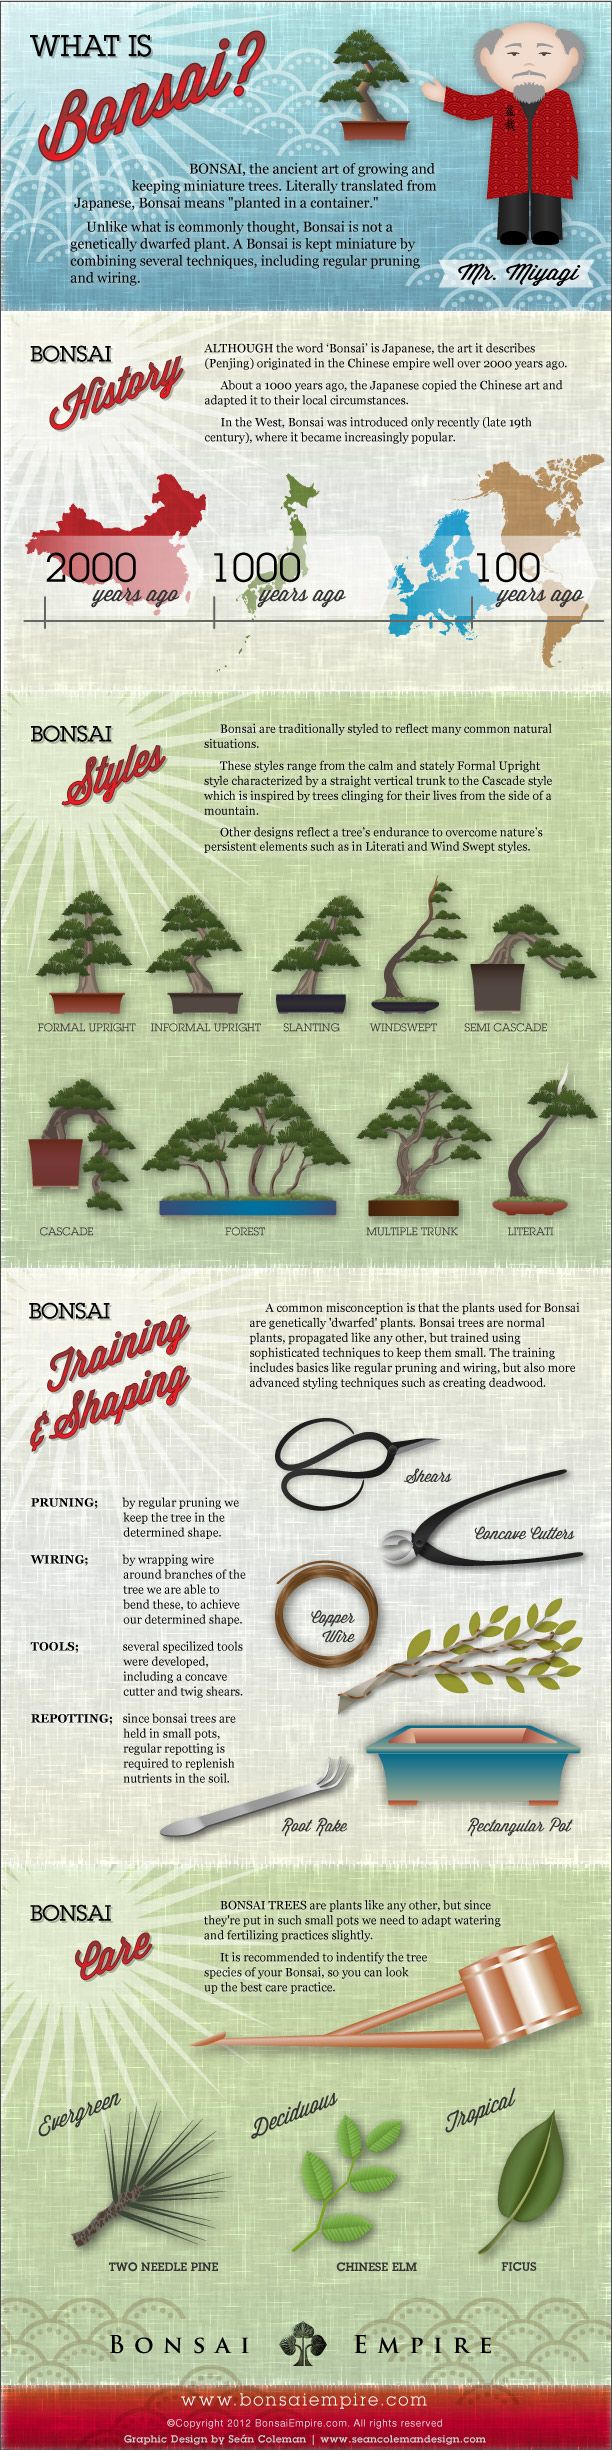 Bonsai infographic